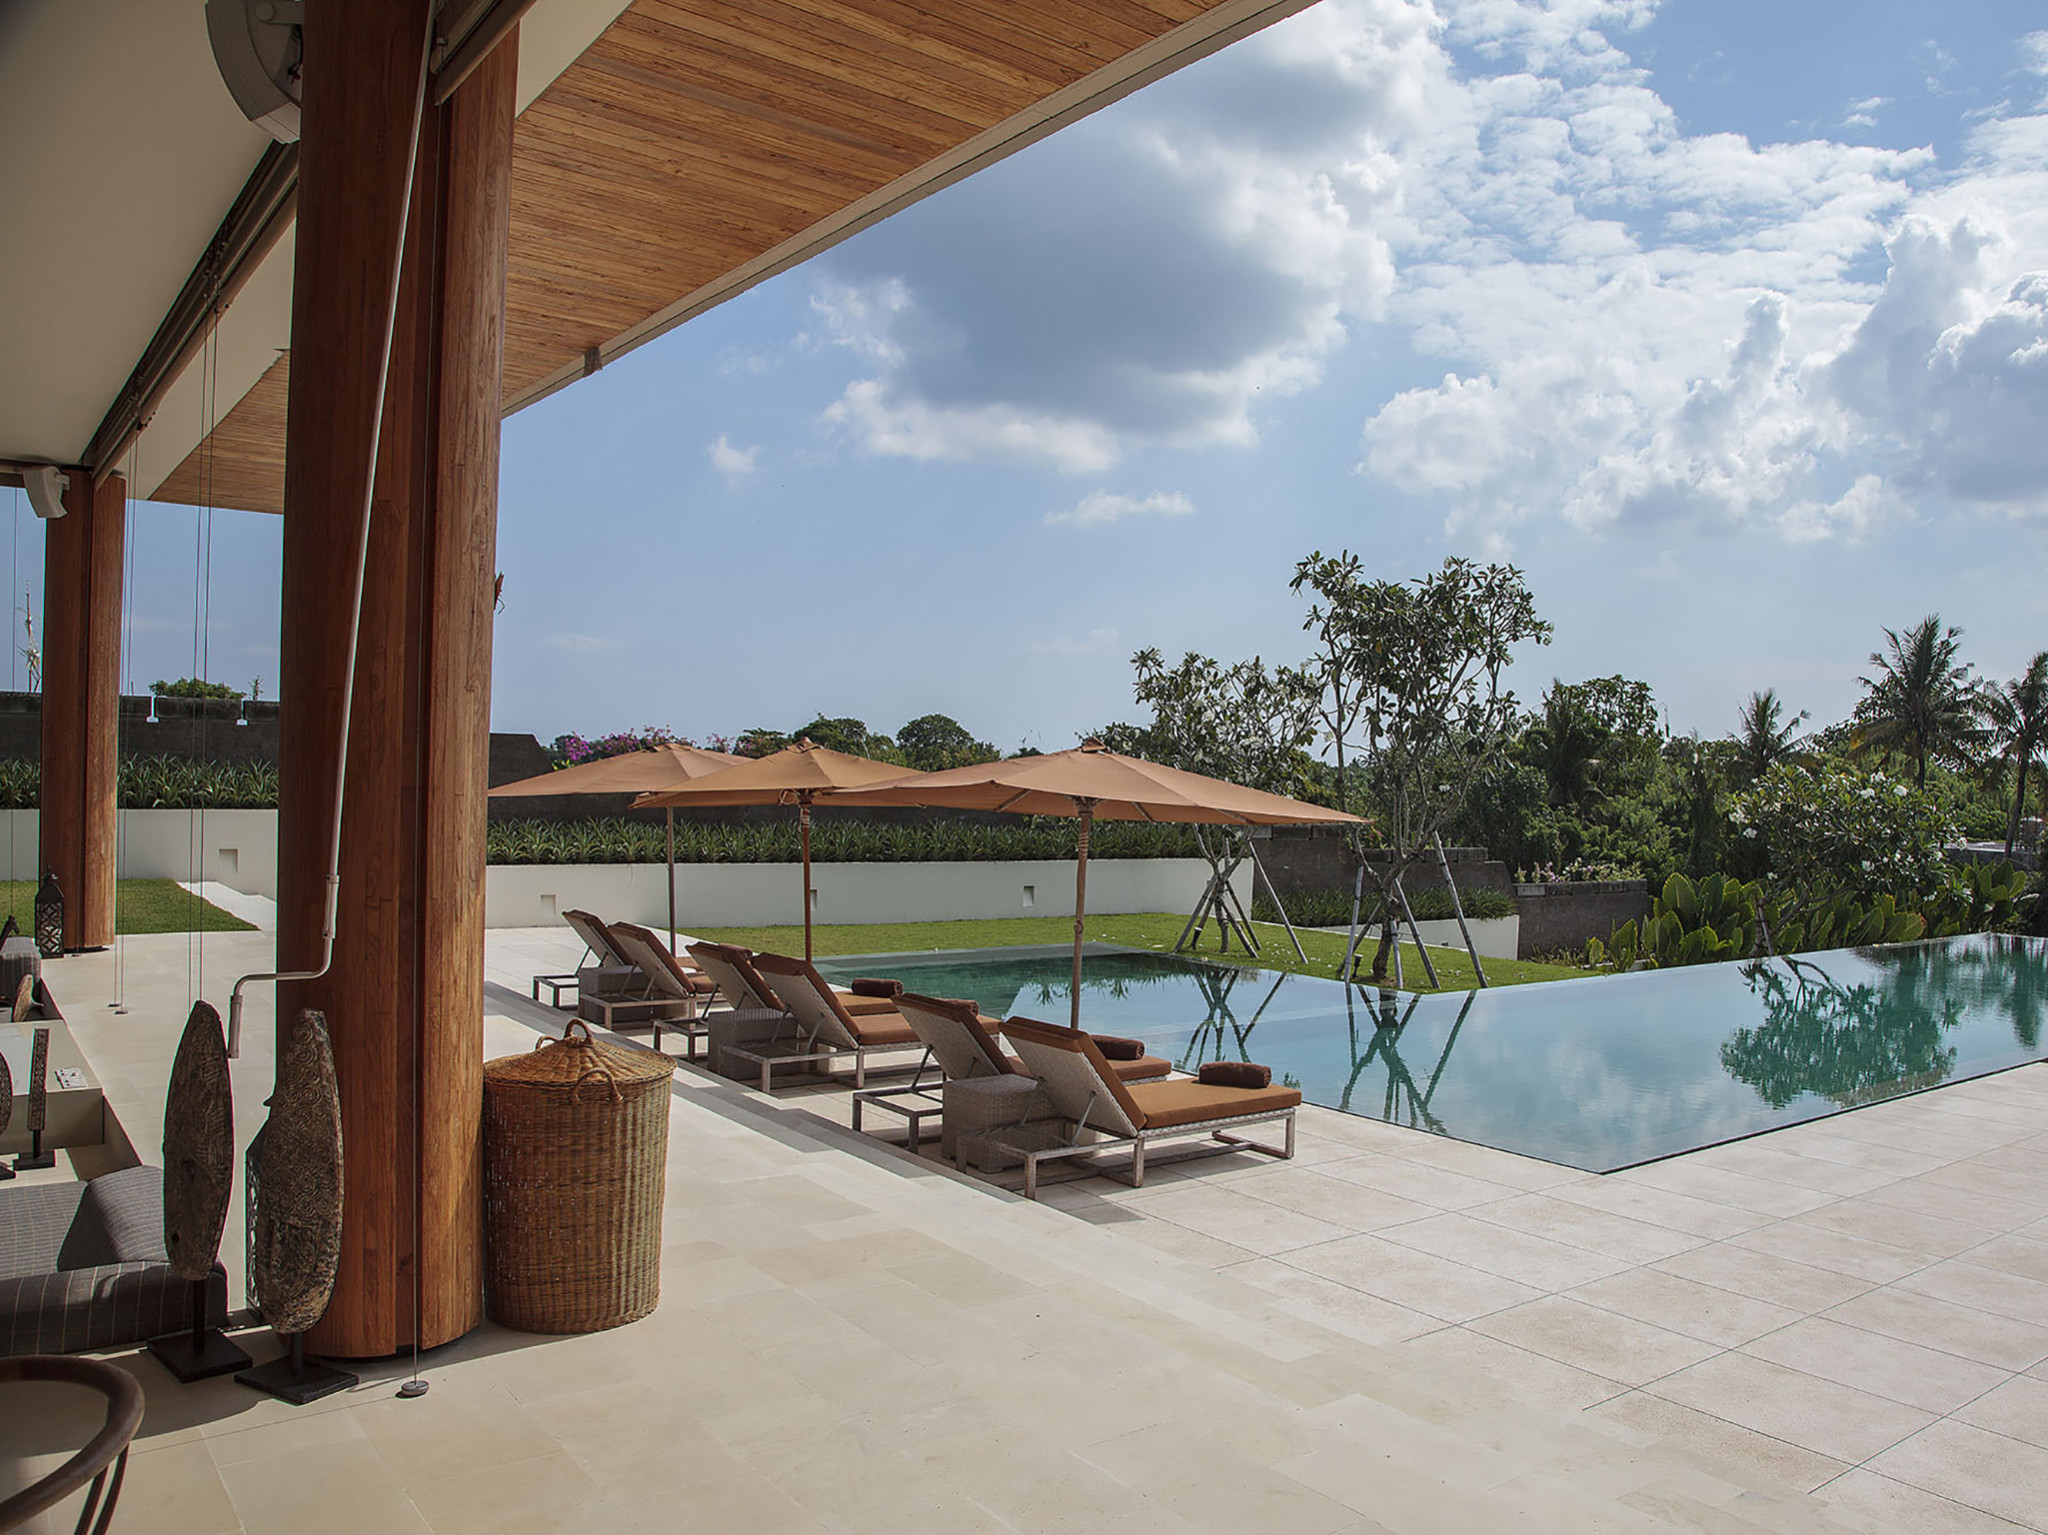 The Iman Villa - Canggu Bali - Infinity pool awaits